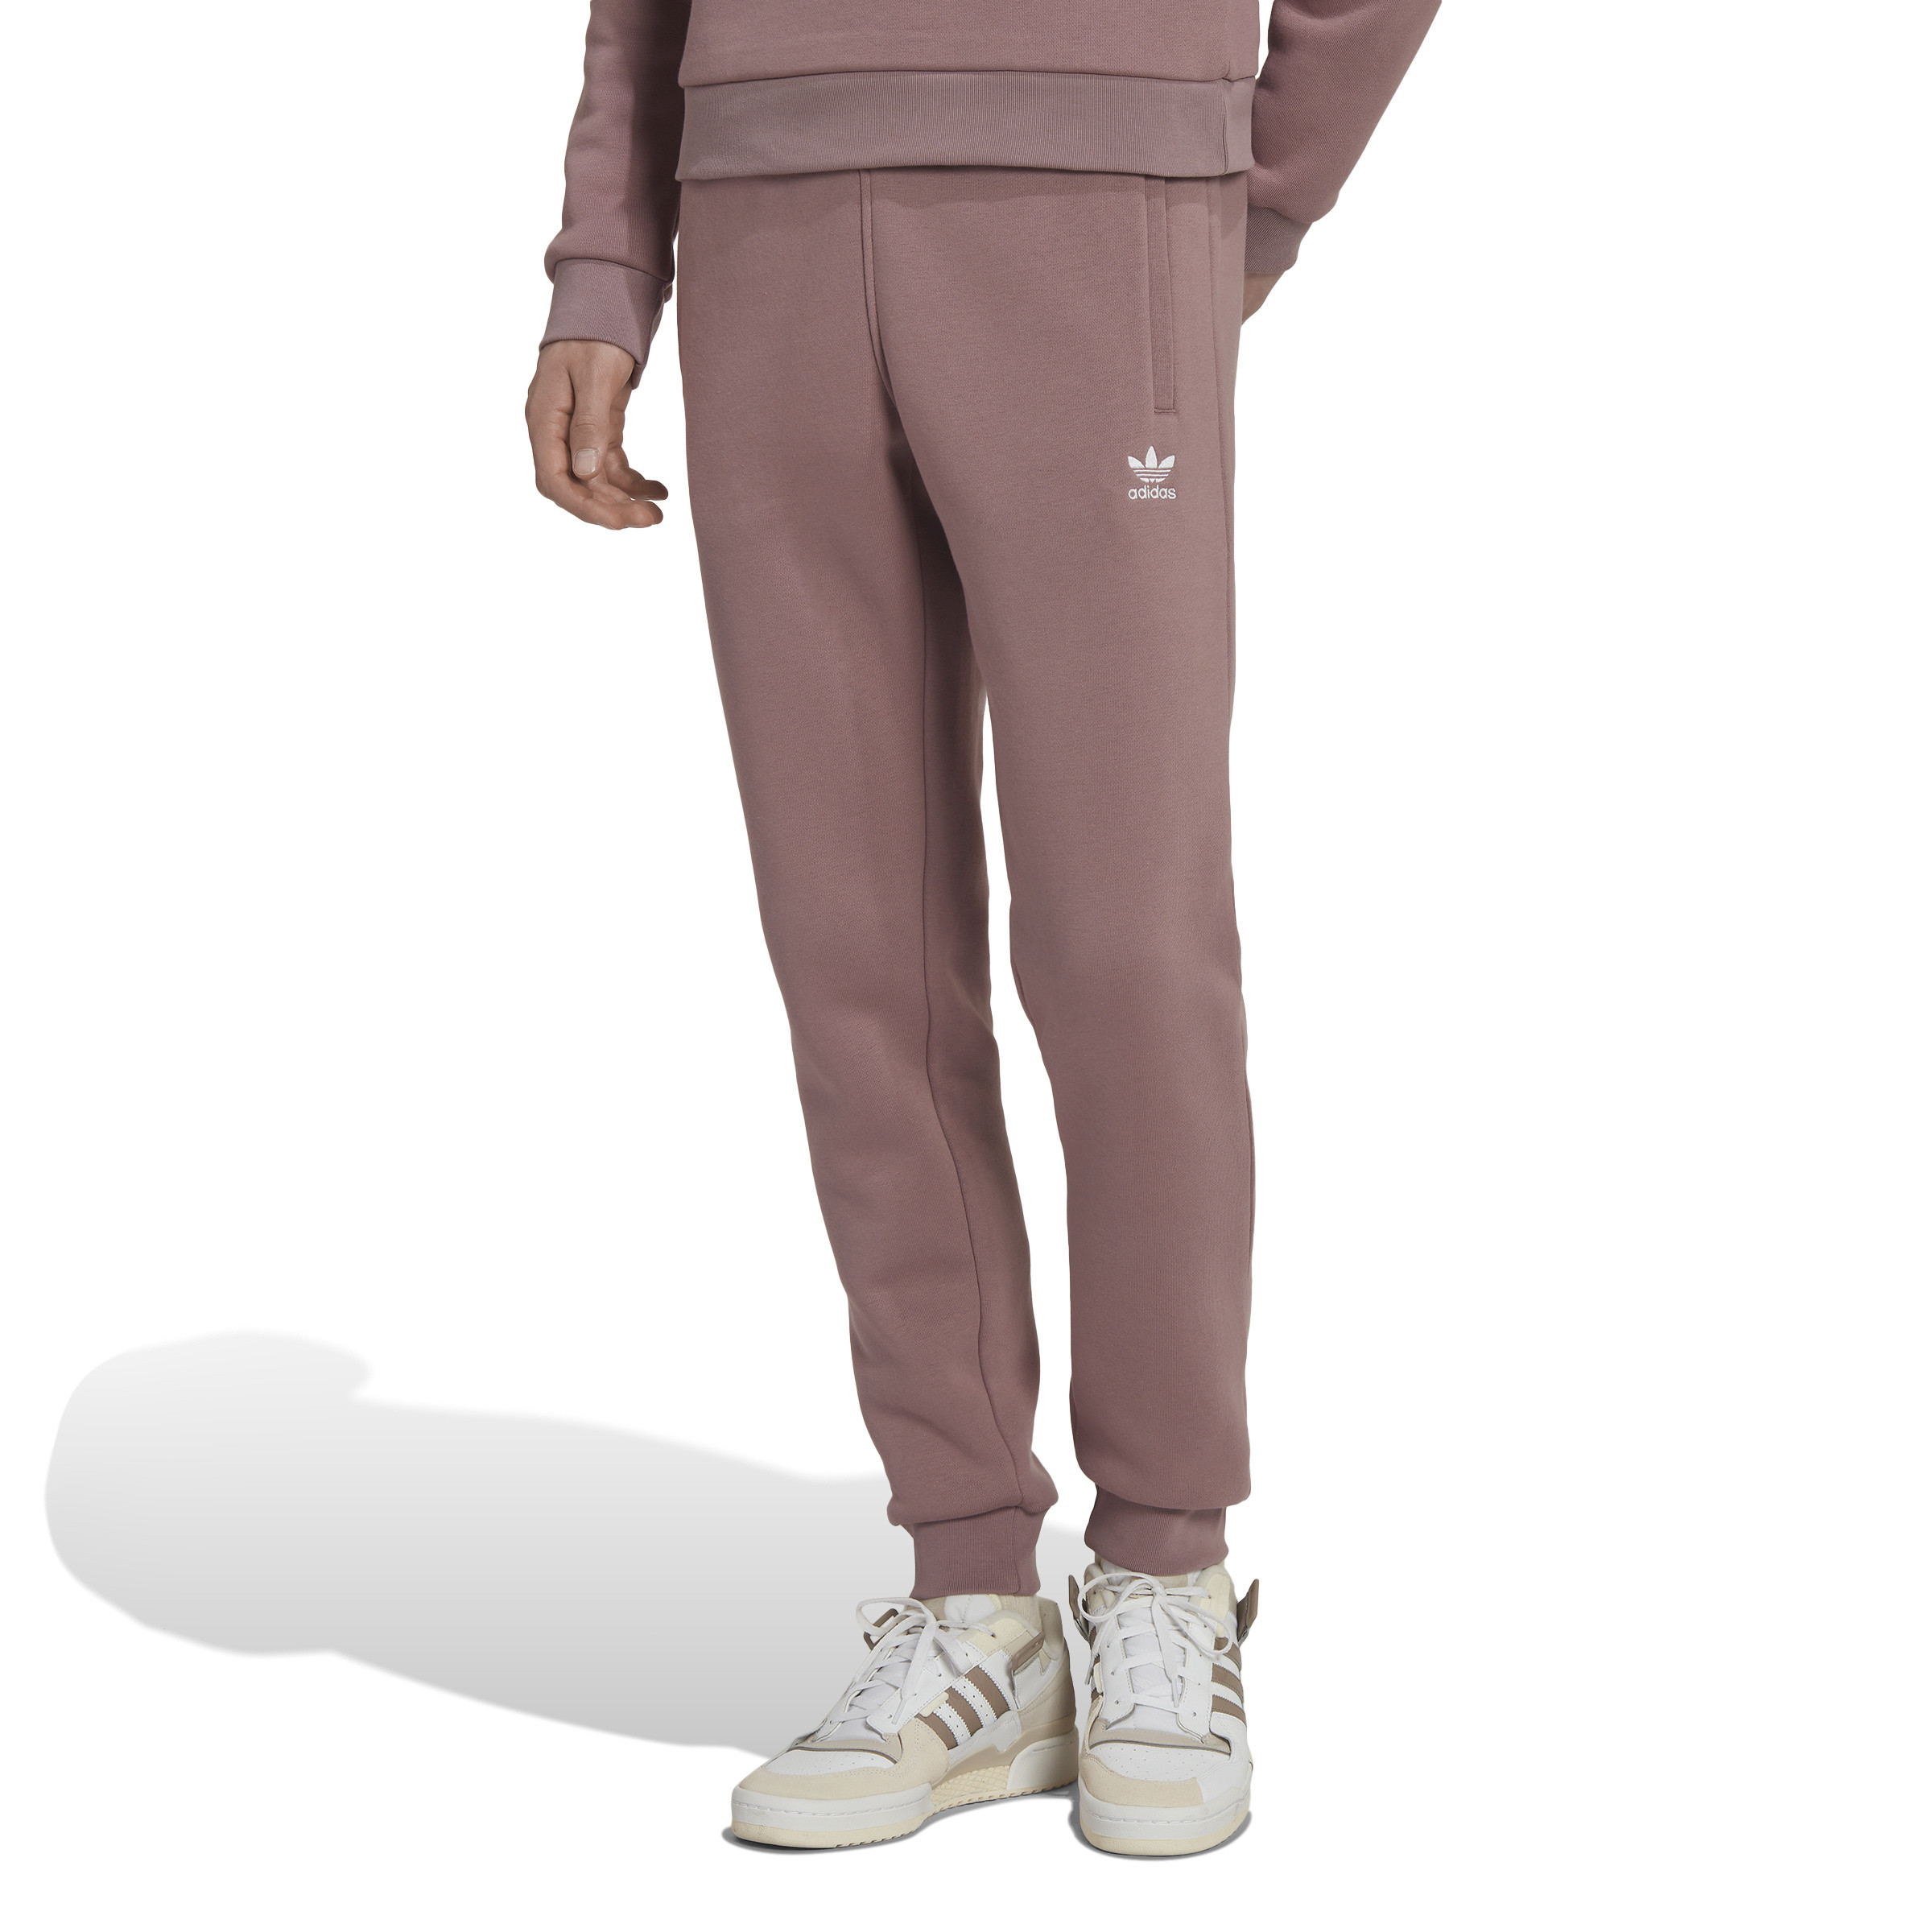 Adidas - Pantaloni adicolor essentials trefoil, Rosa antico, large image number 1